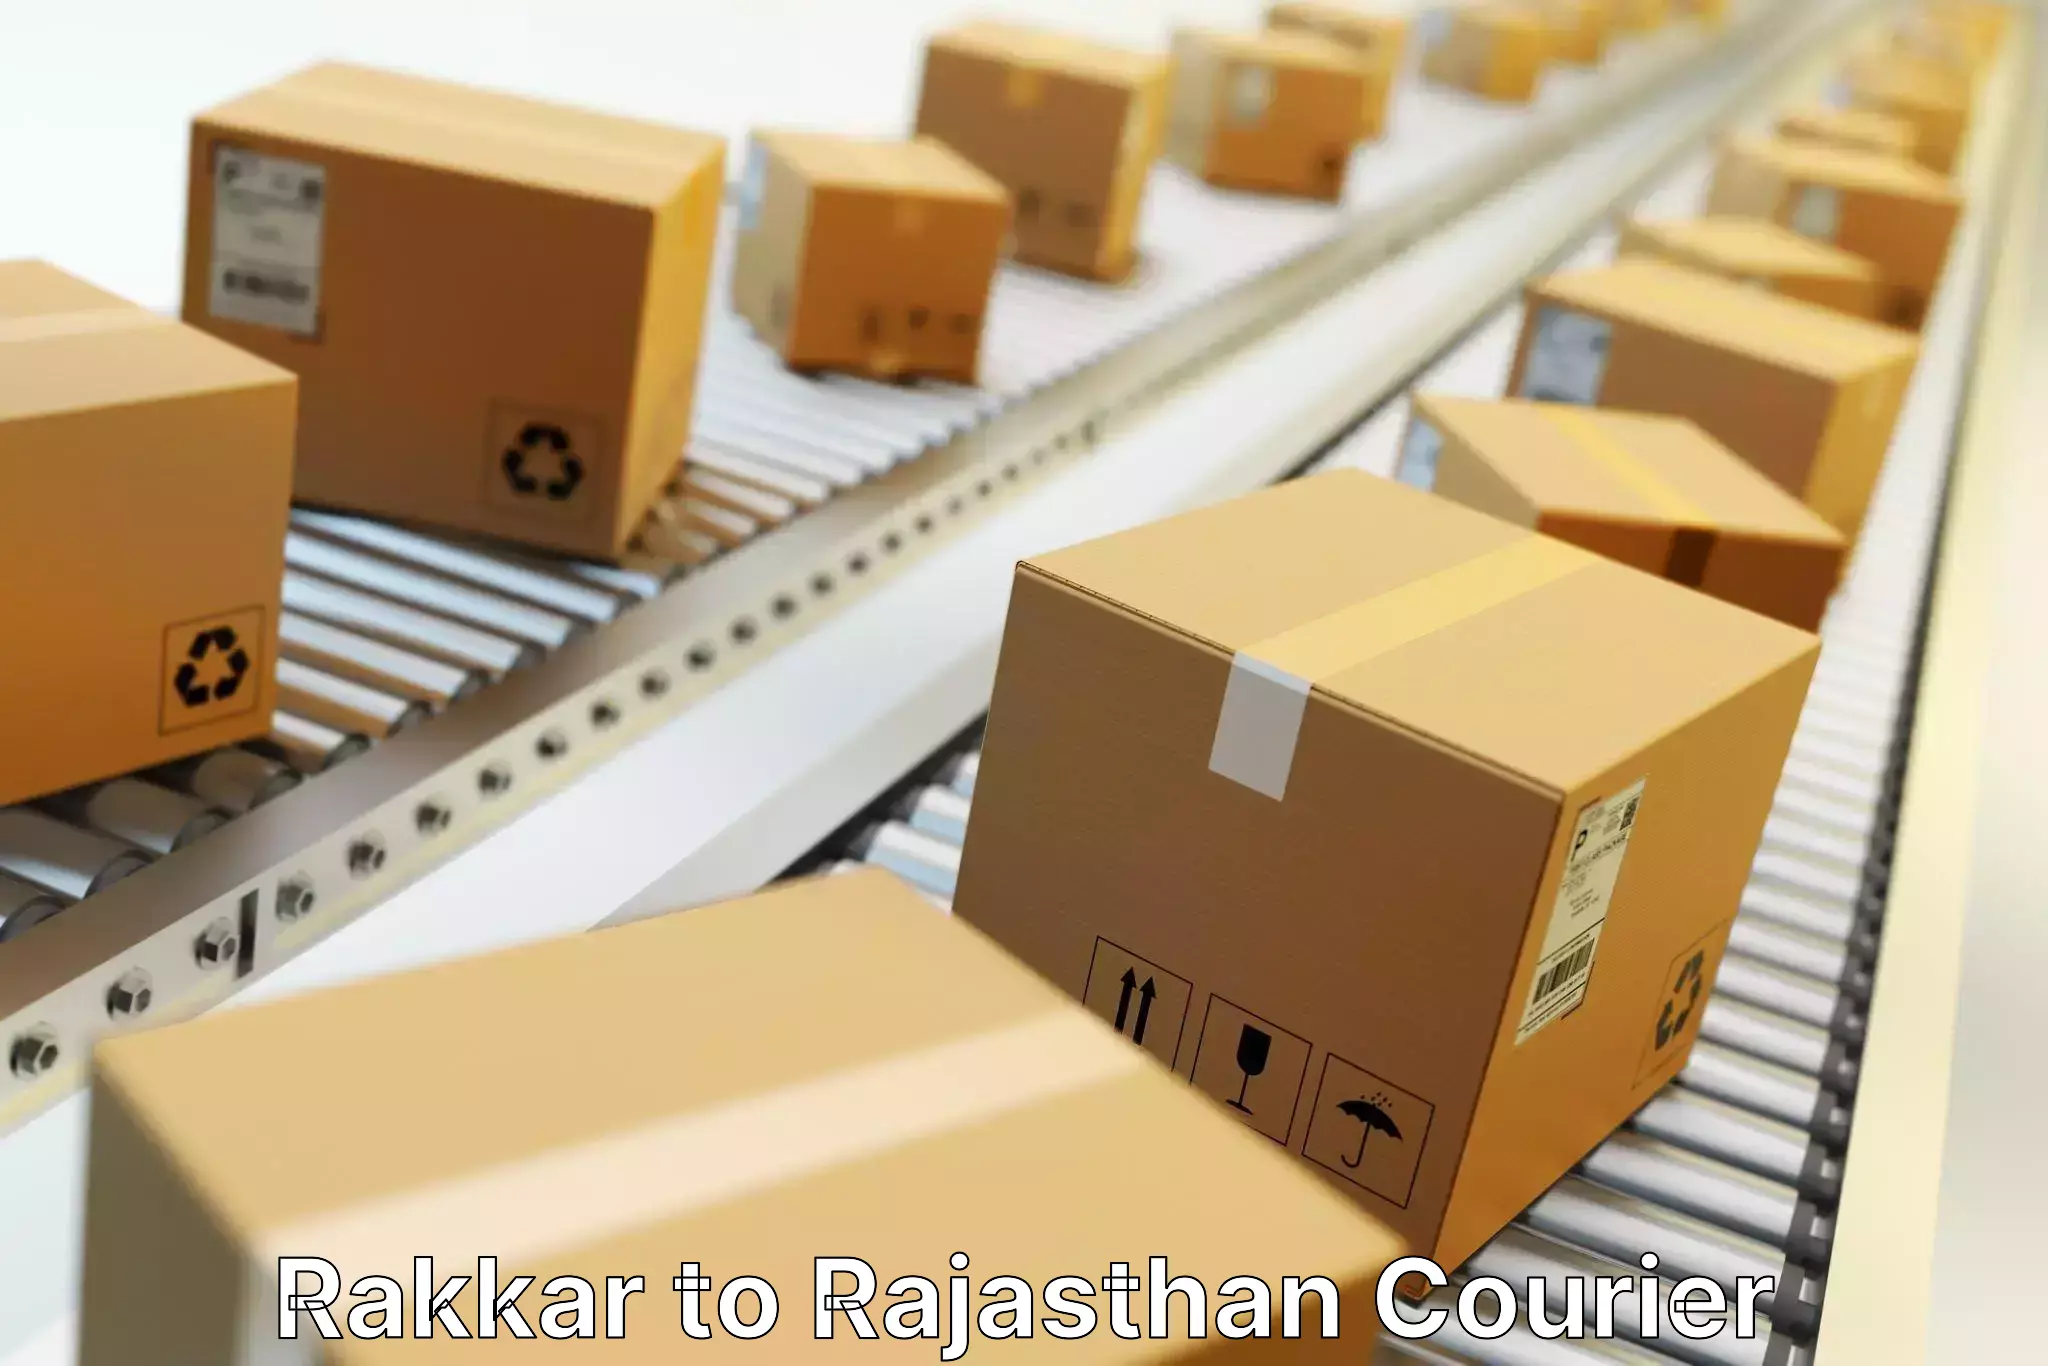 Next-day delivery options Rakkar to Khandela Sikar